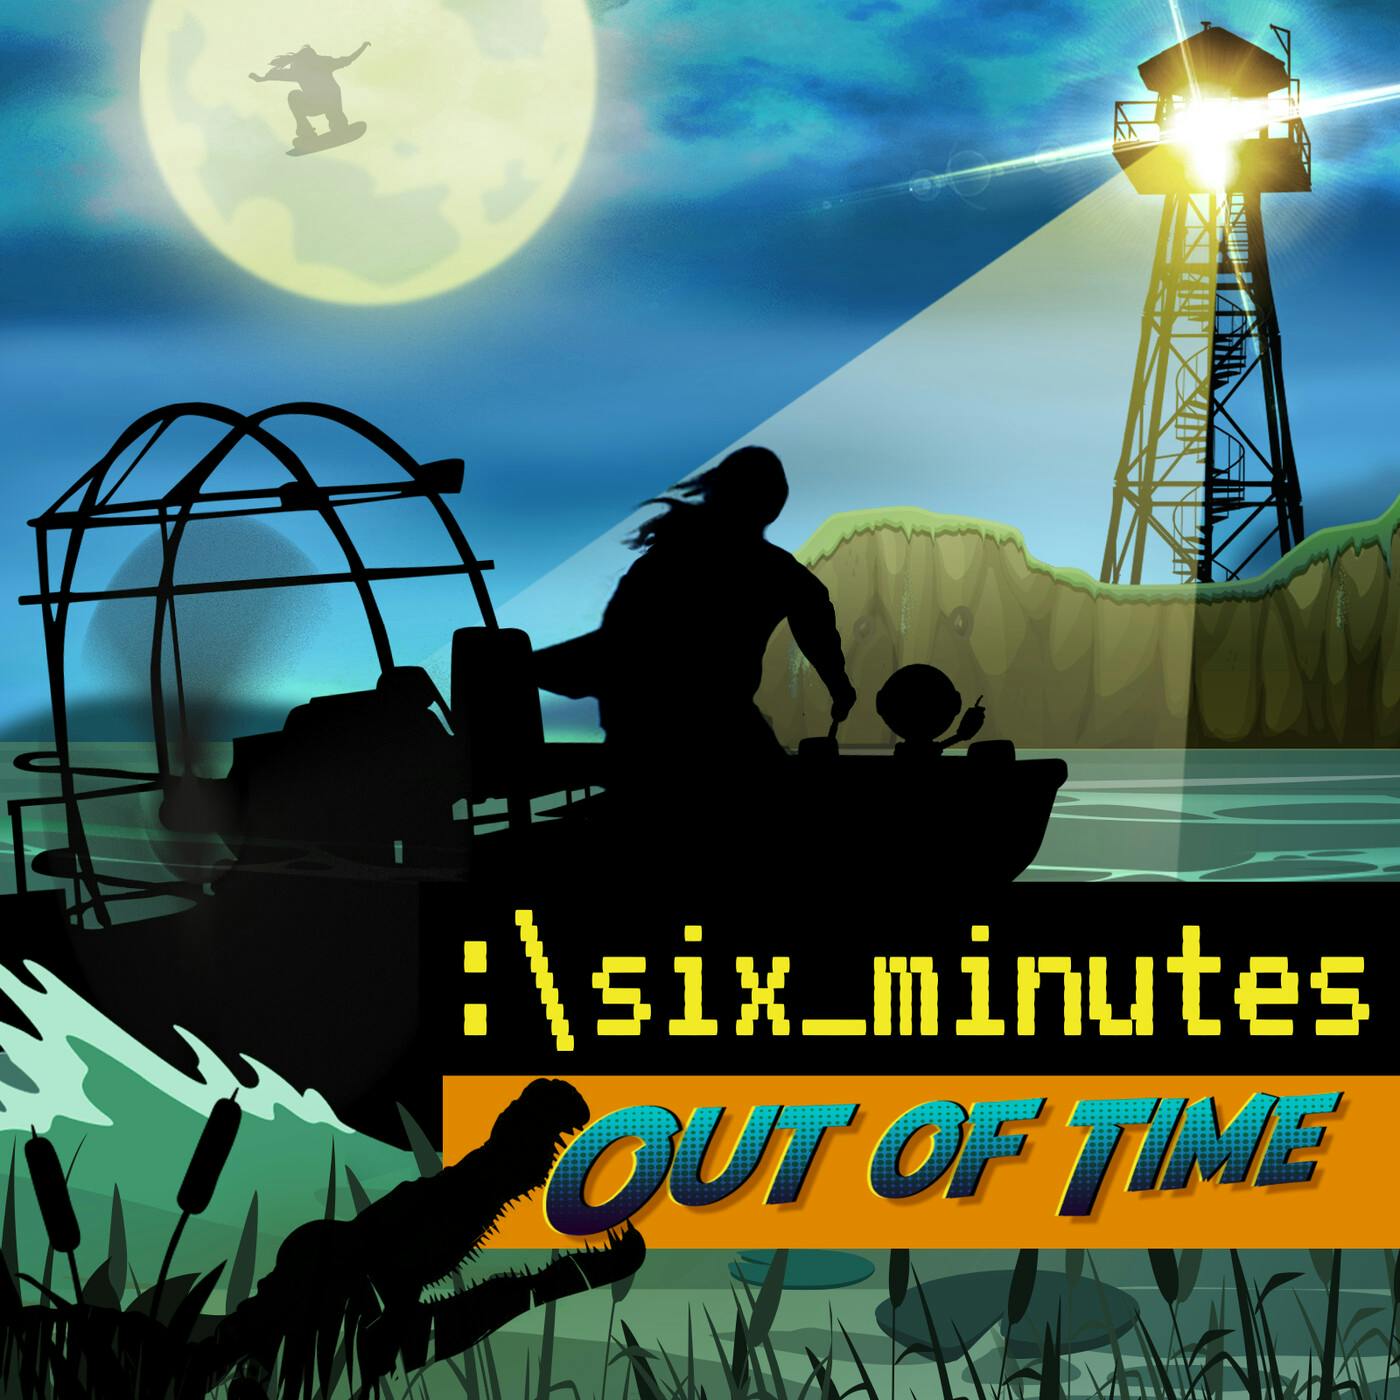 "Six Minutes" Podcast